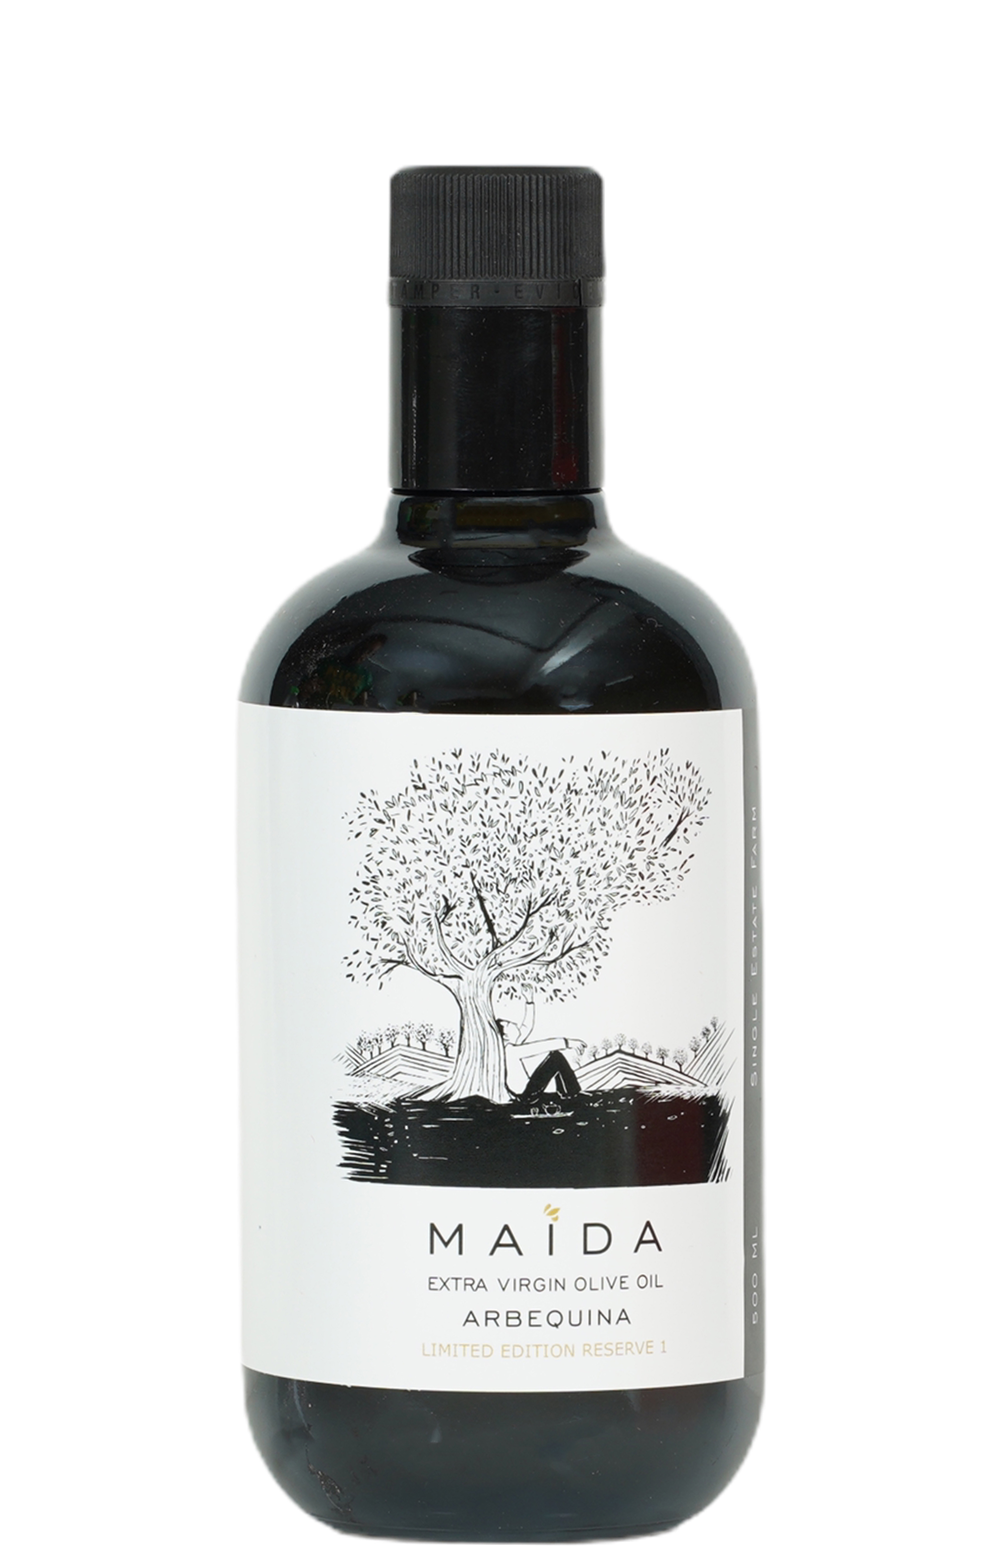 Maida Limited Edition Reserve I